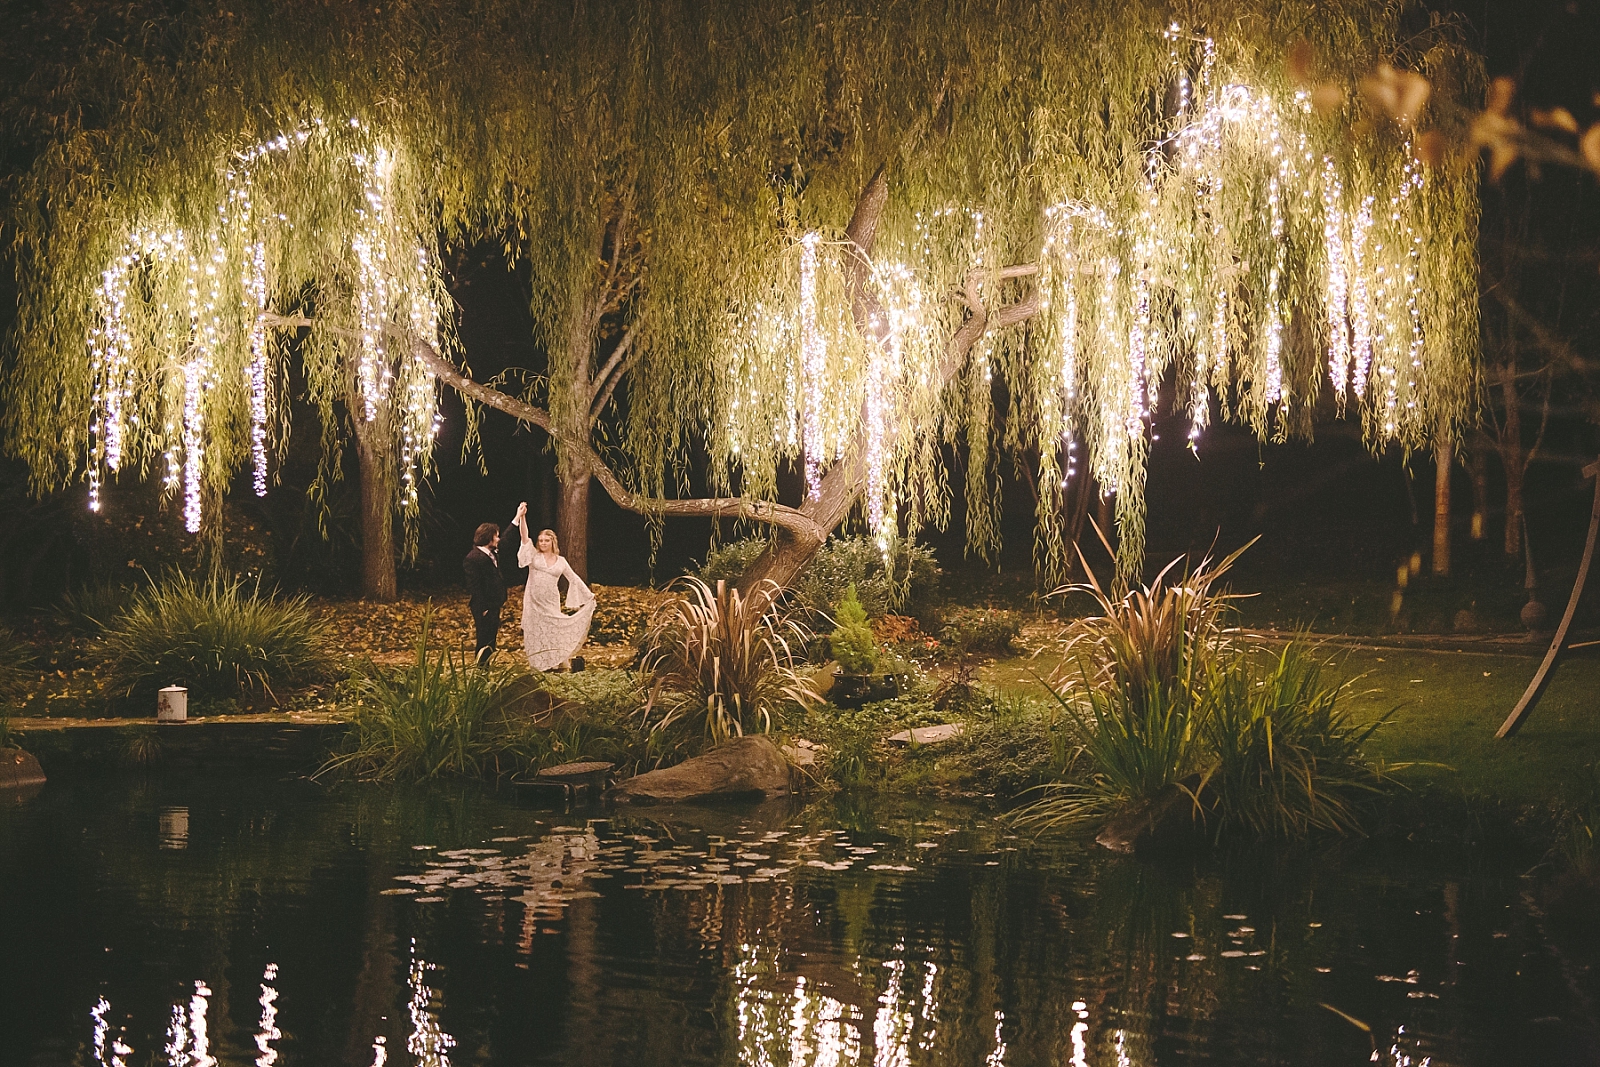 Fairytale wedding photos at night